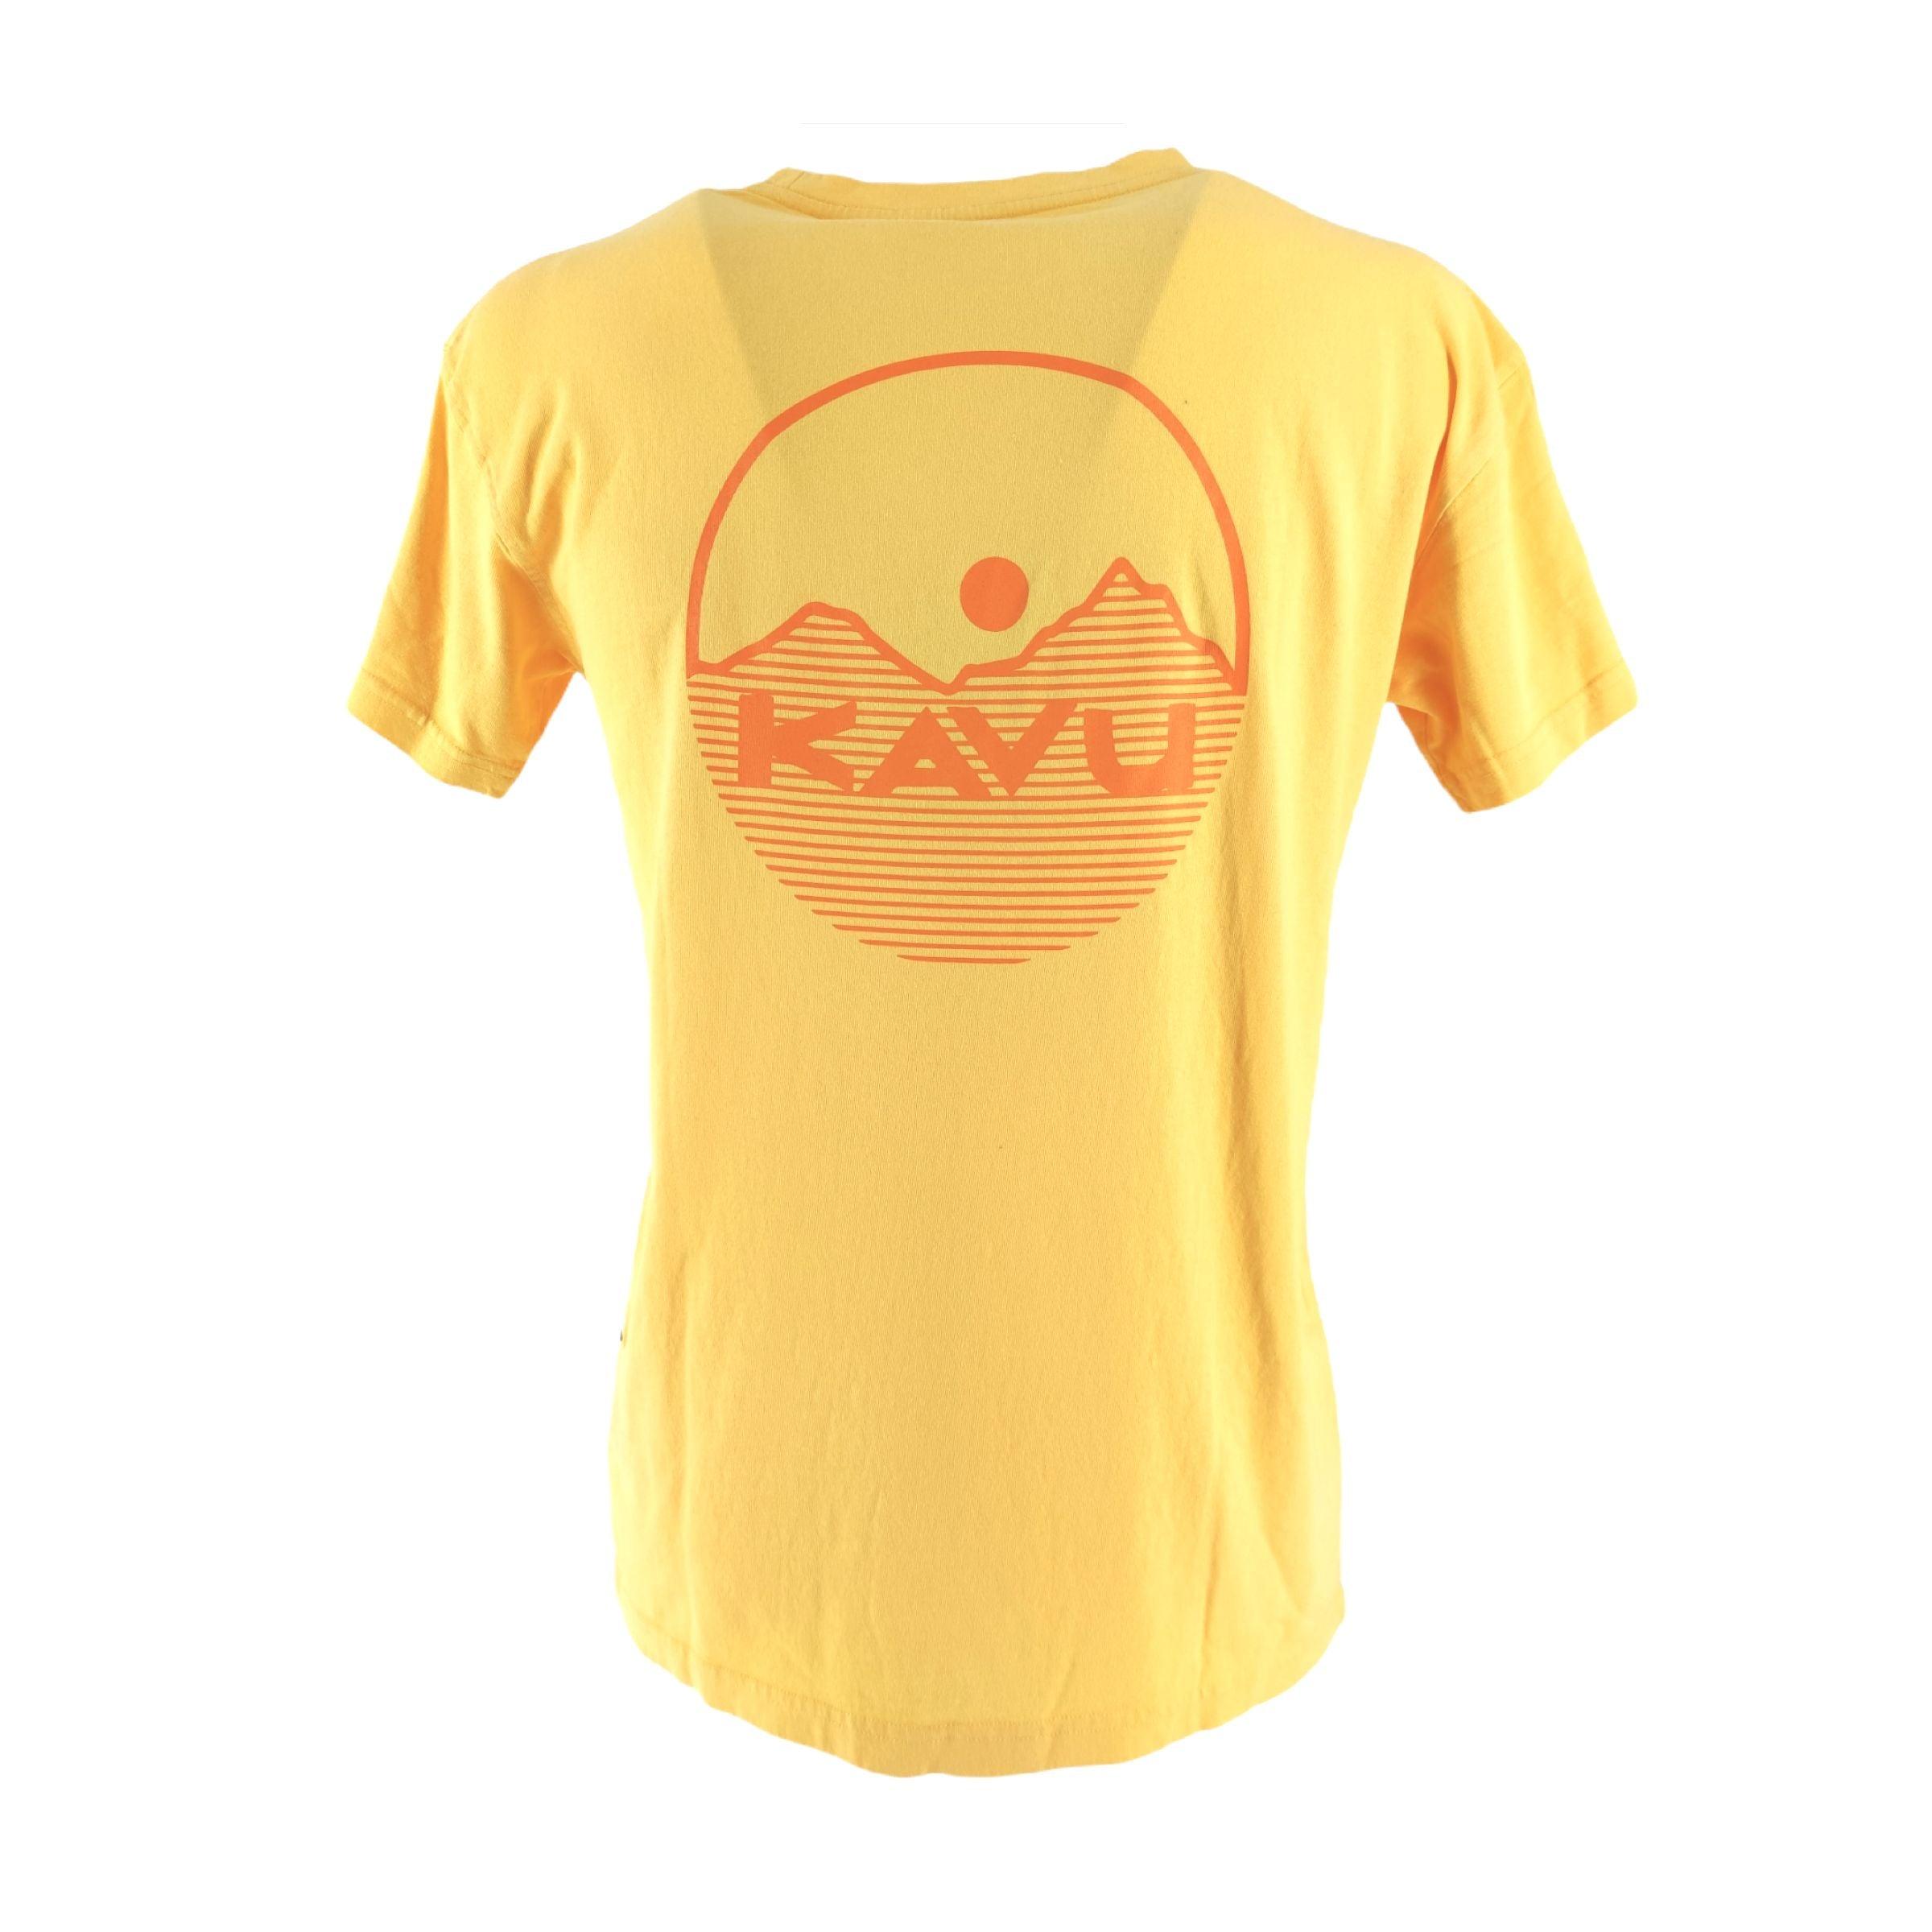 Kavu | T-shirt Busy Uomo Sunray - Fabbrica Ski Sises